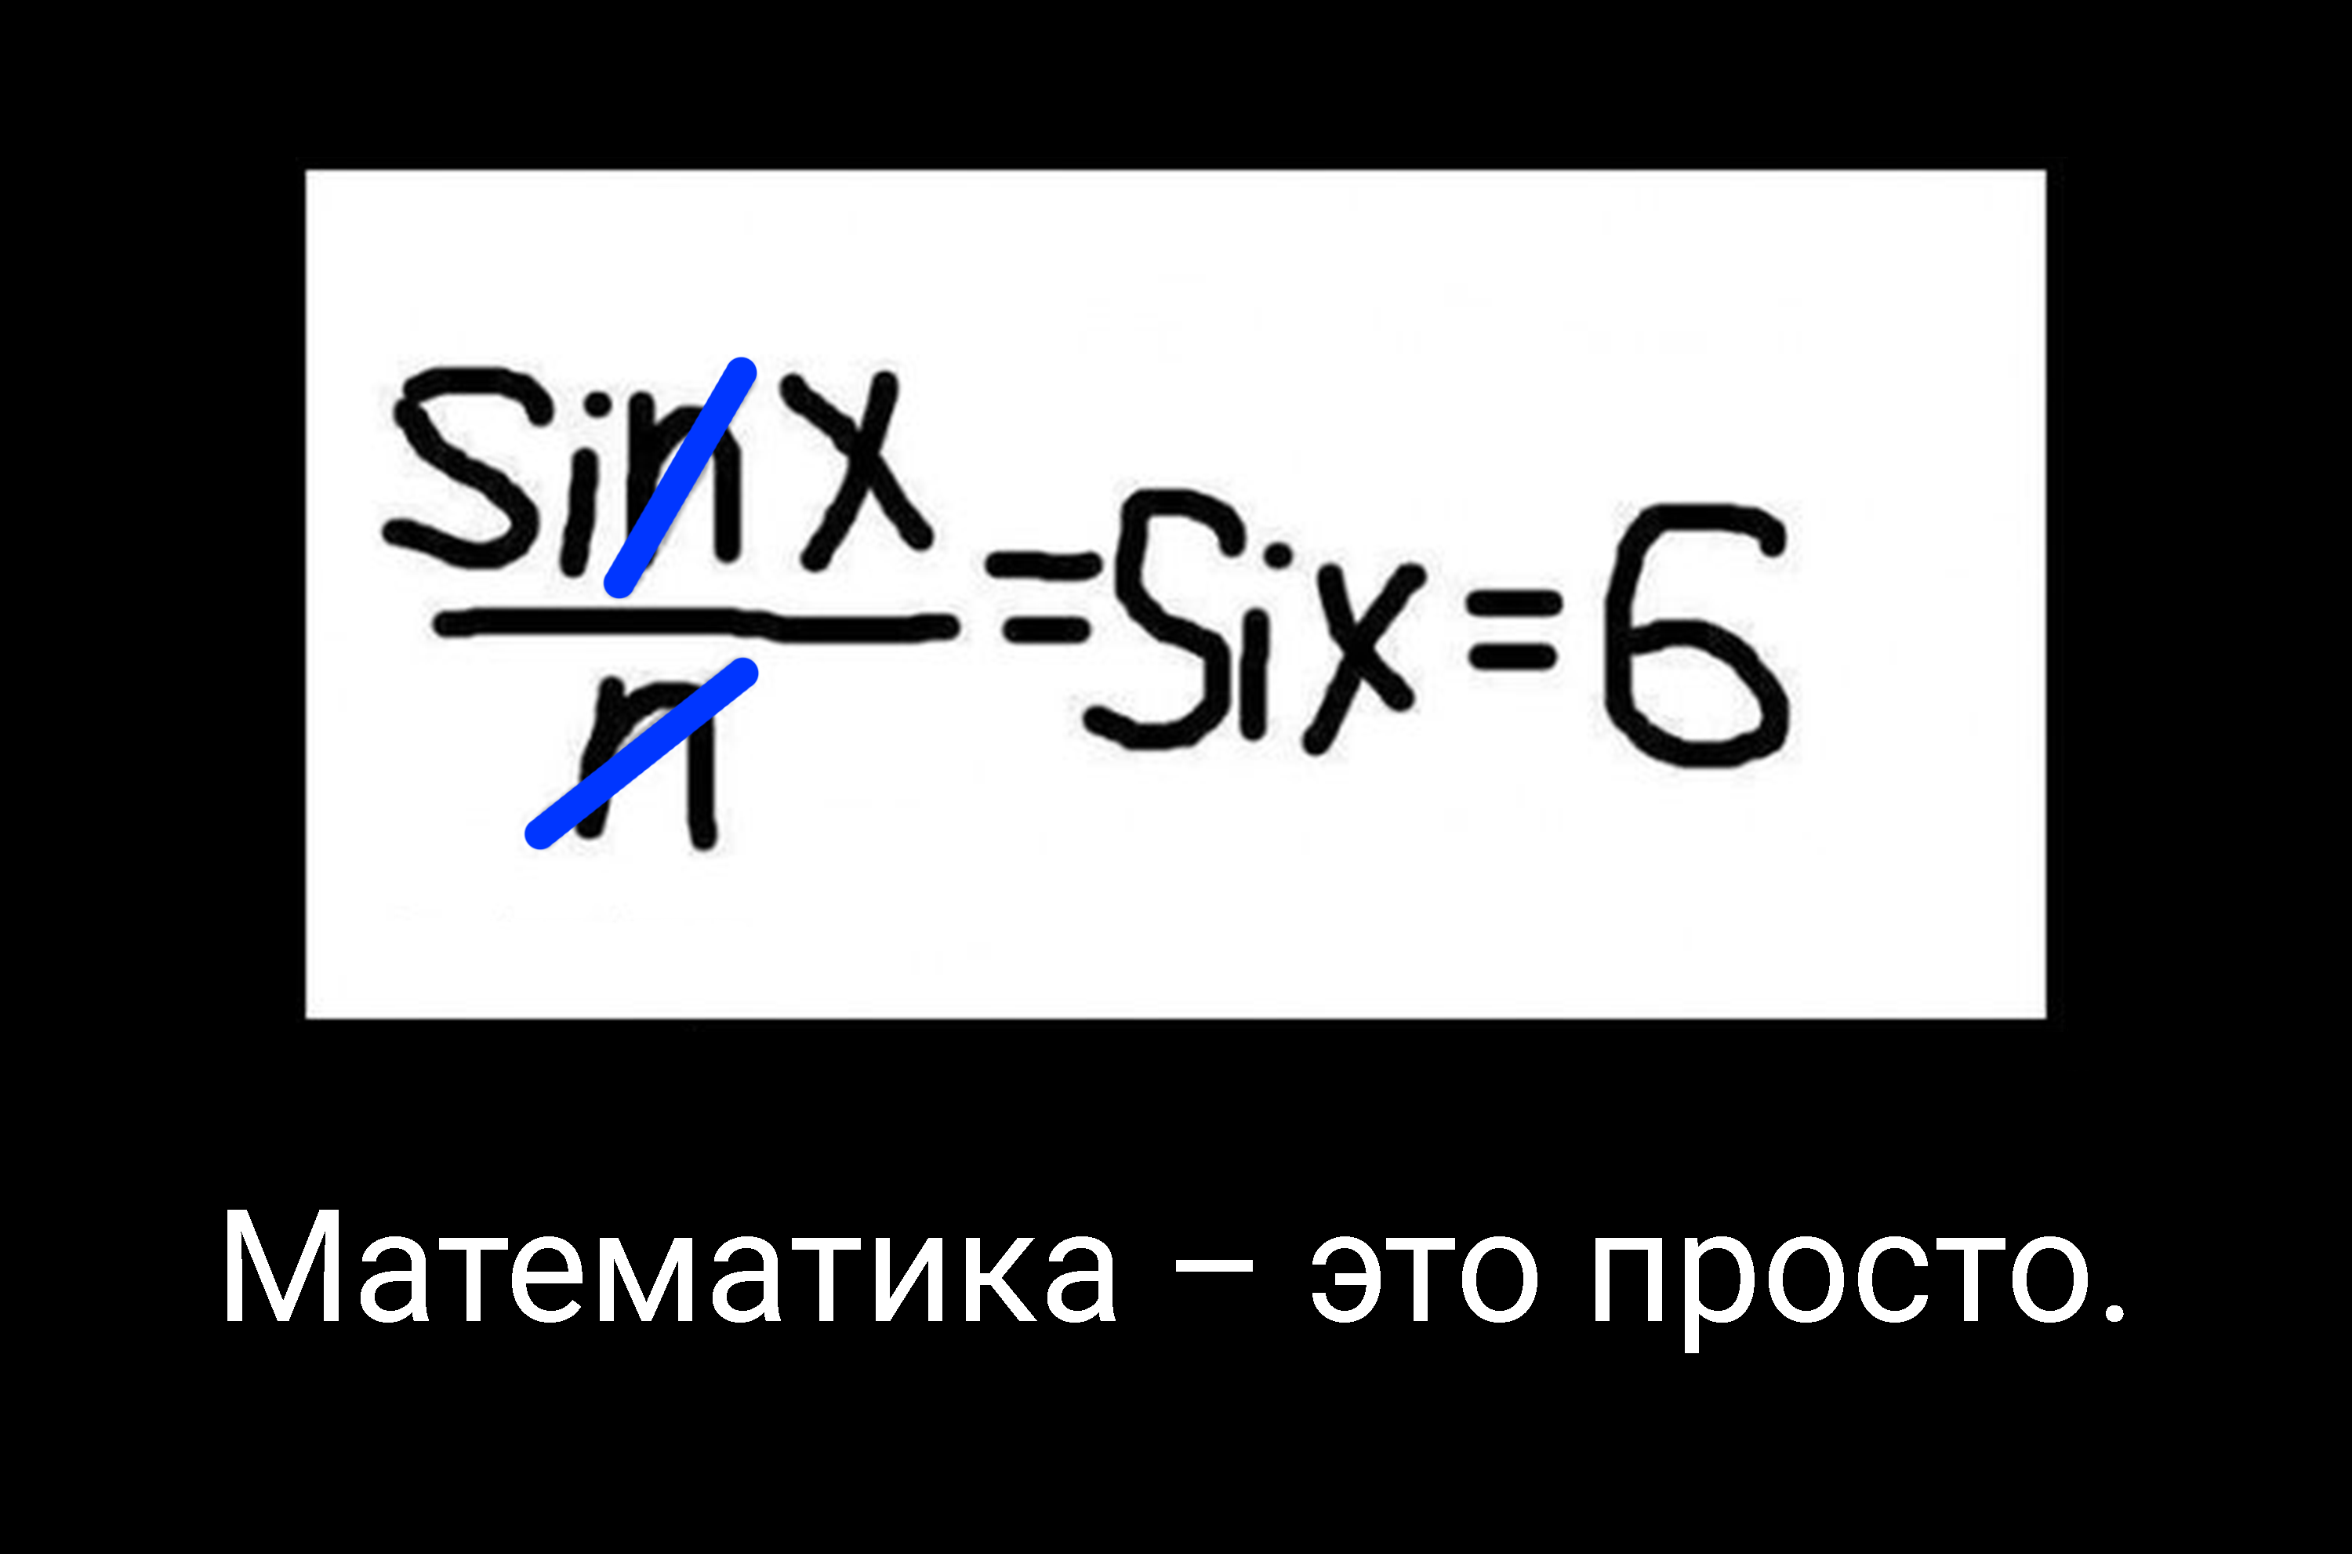 Абсурдный математический пример: sinx/n=six=6.